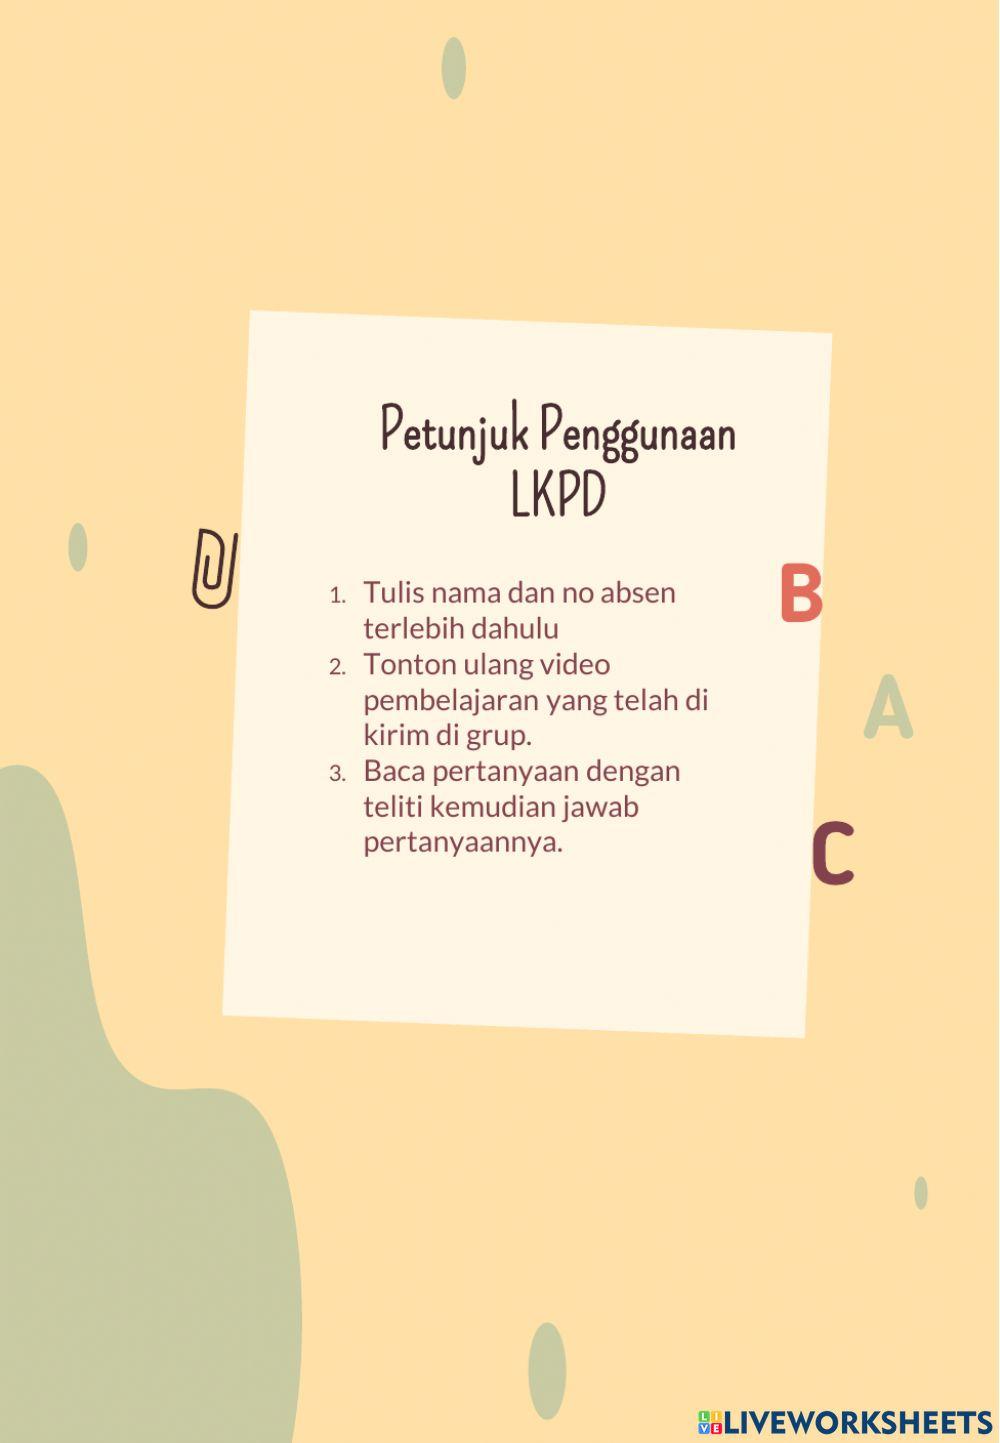 LKPD tema 9 sub tema 3 pembelajaran ke 4 muatan PPKn dan Bahasa Indonesia